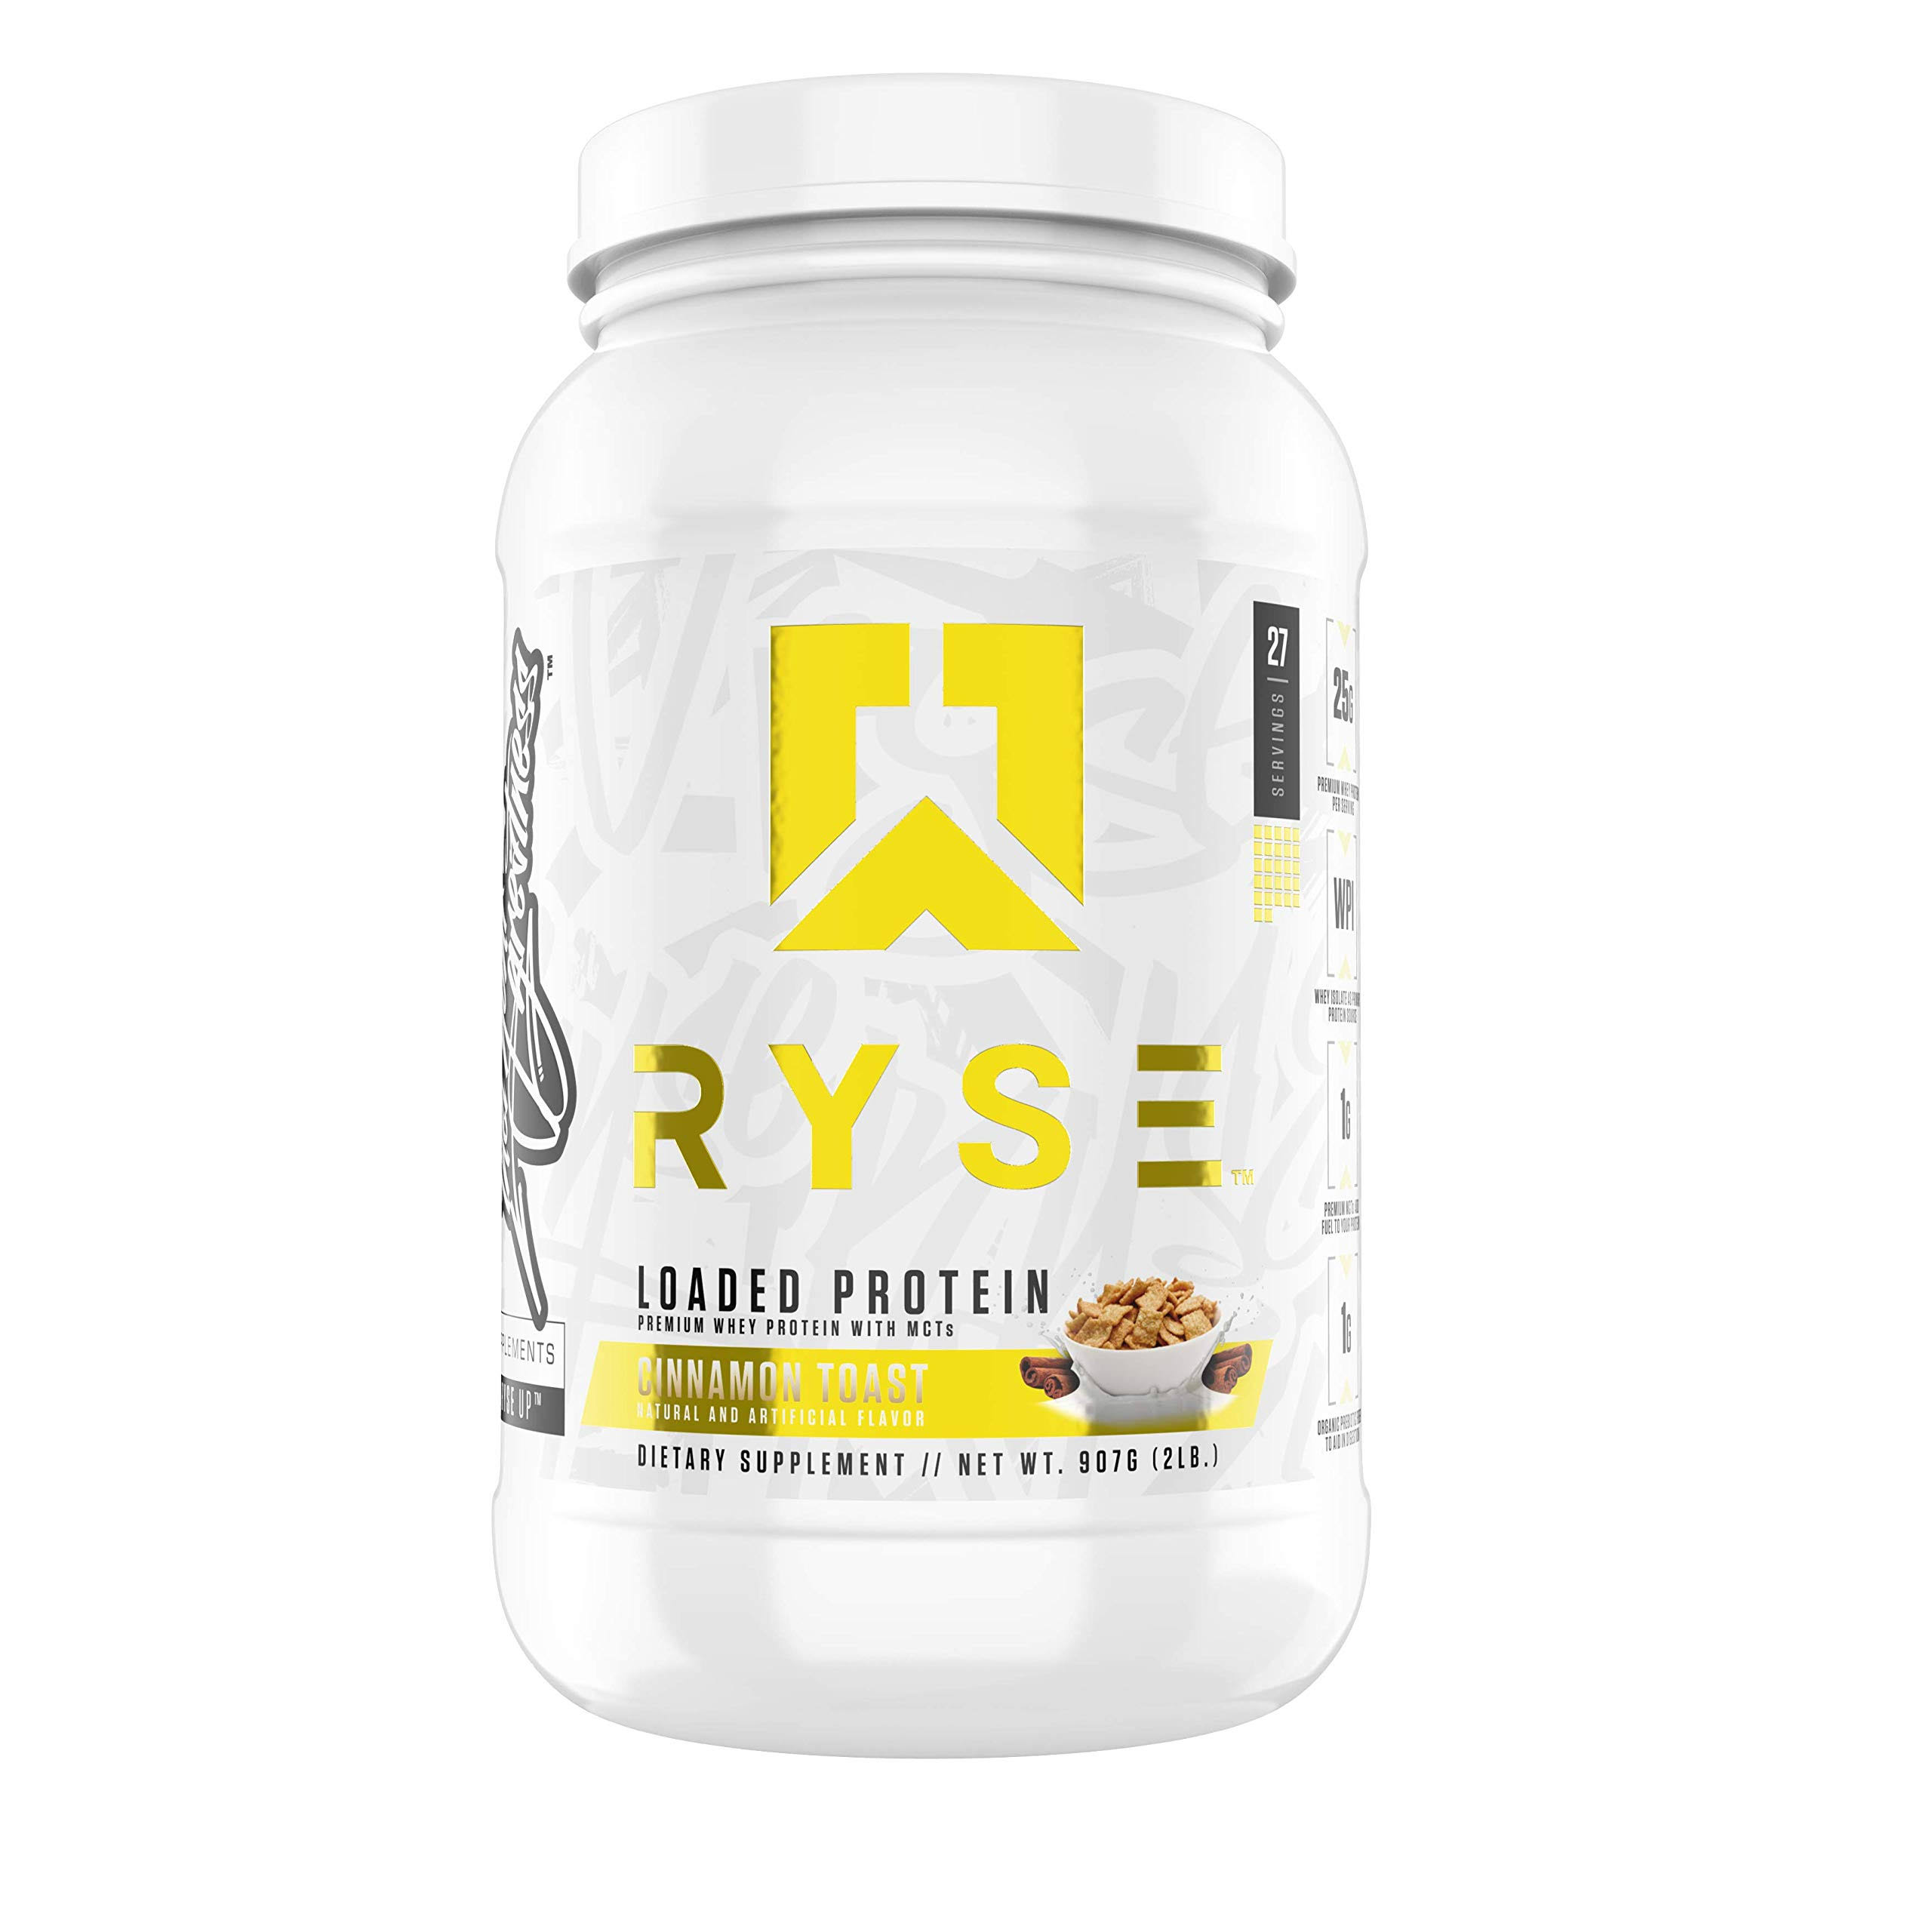 Ryse up Loaded Protein Supplement - Cinnamon Toast